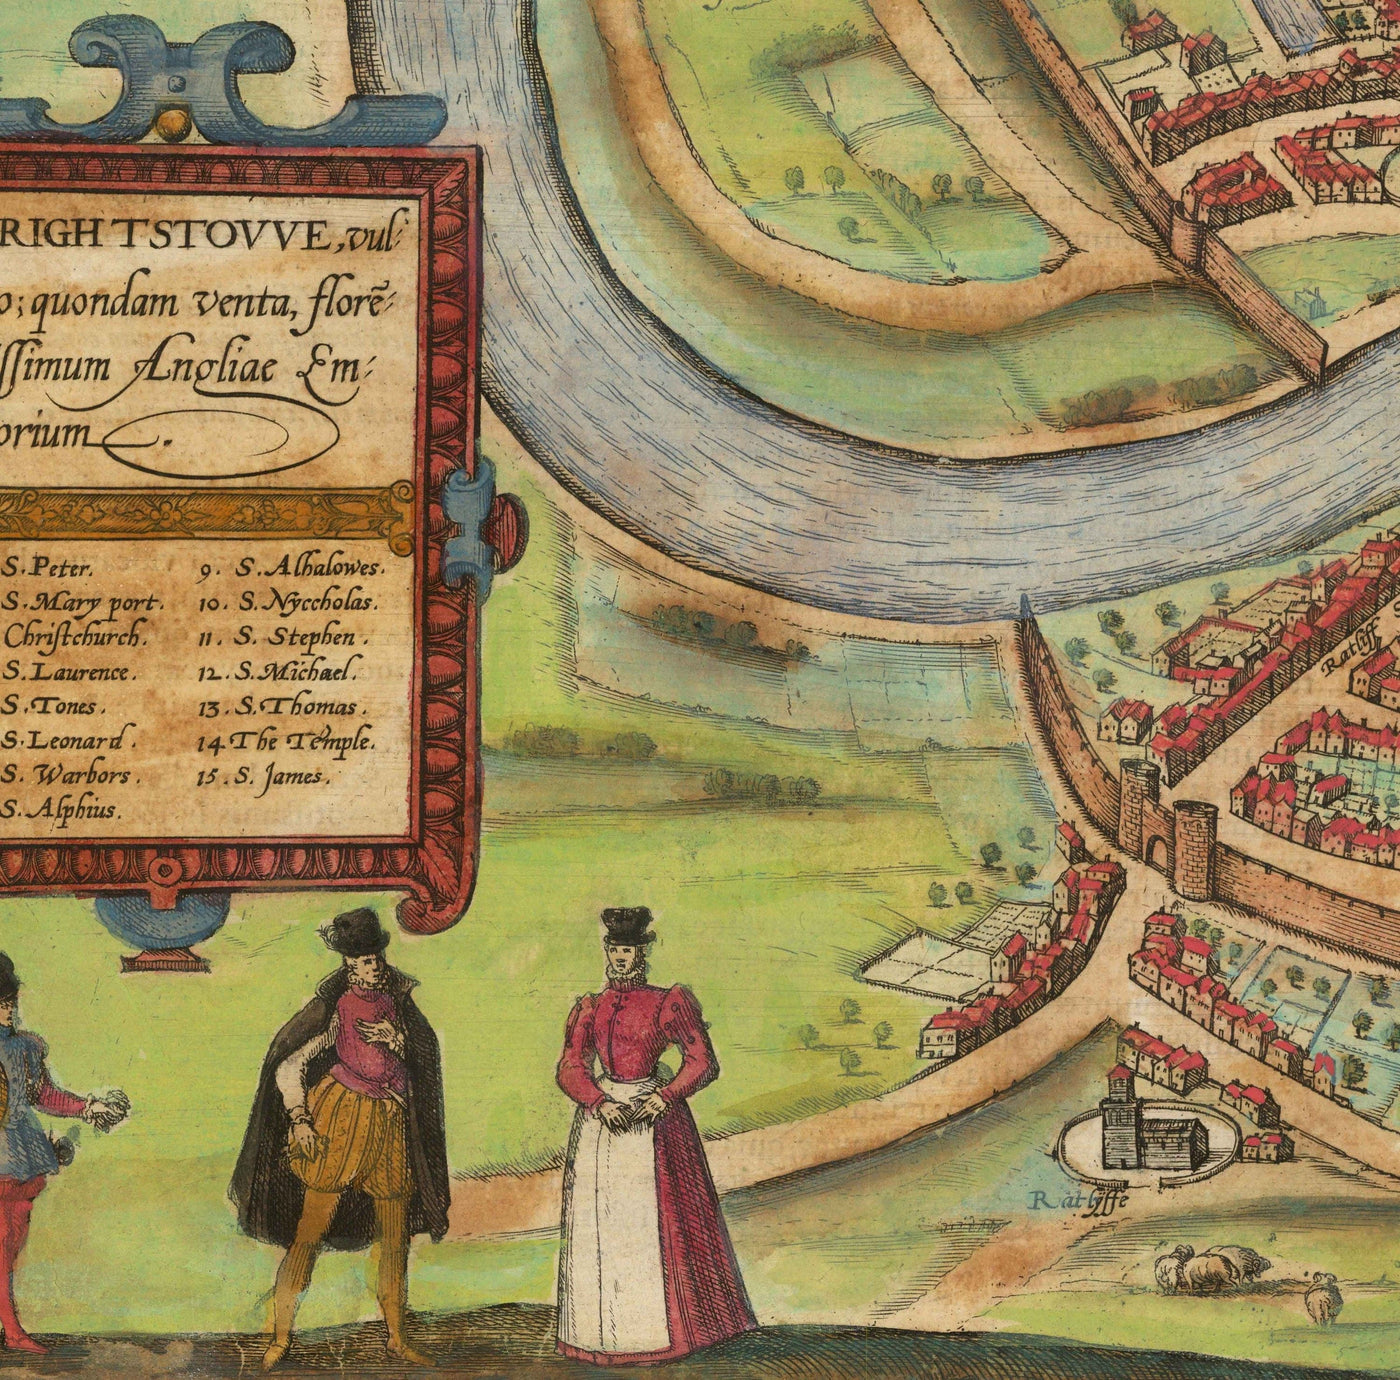 Ancienne carte de Bristol, 1588 par Braun - Brightstowe, Avon, St Nicholas, Newgate, armoiries